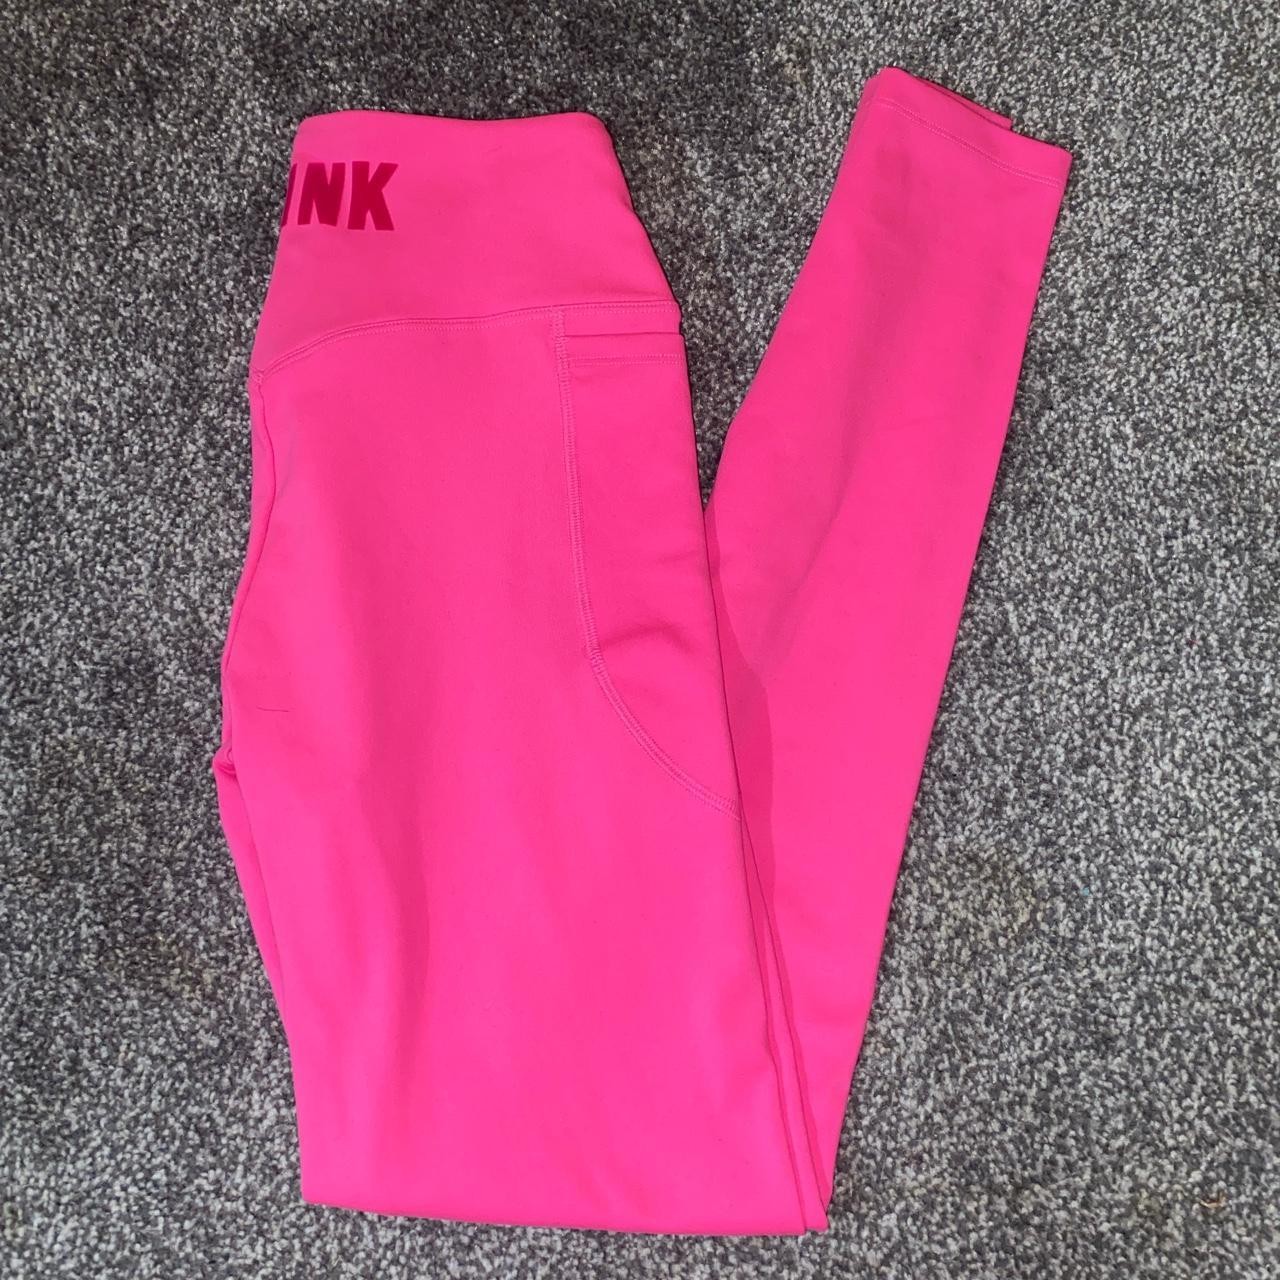 PINK - Victoria's Secret Fold Over Yoga Pants - $22 (63% Off